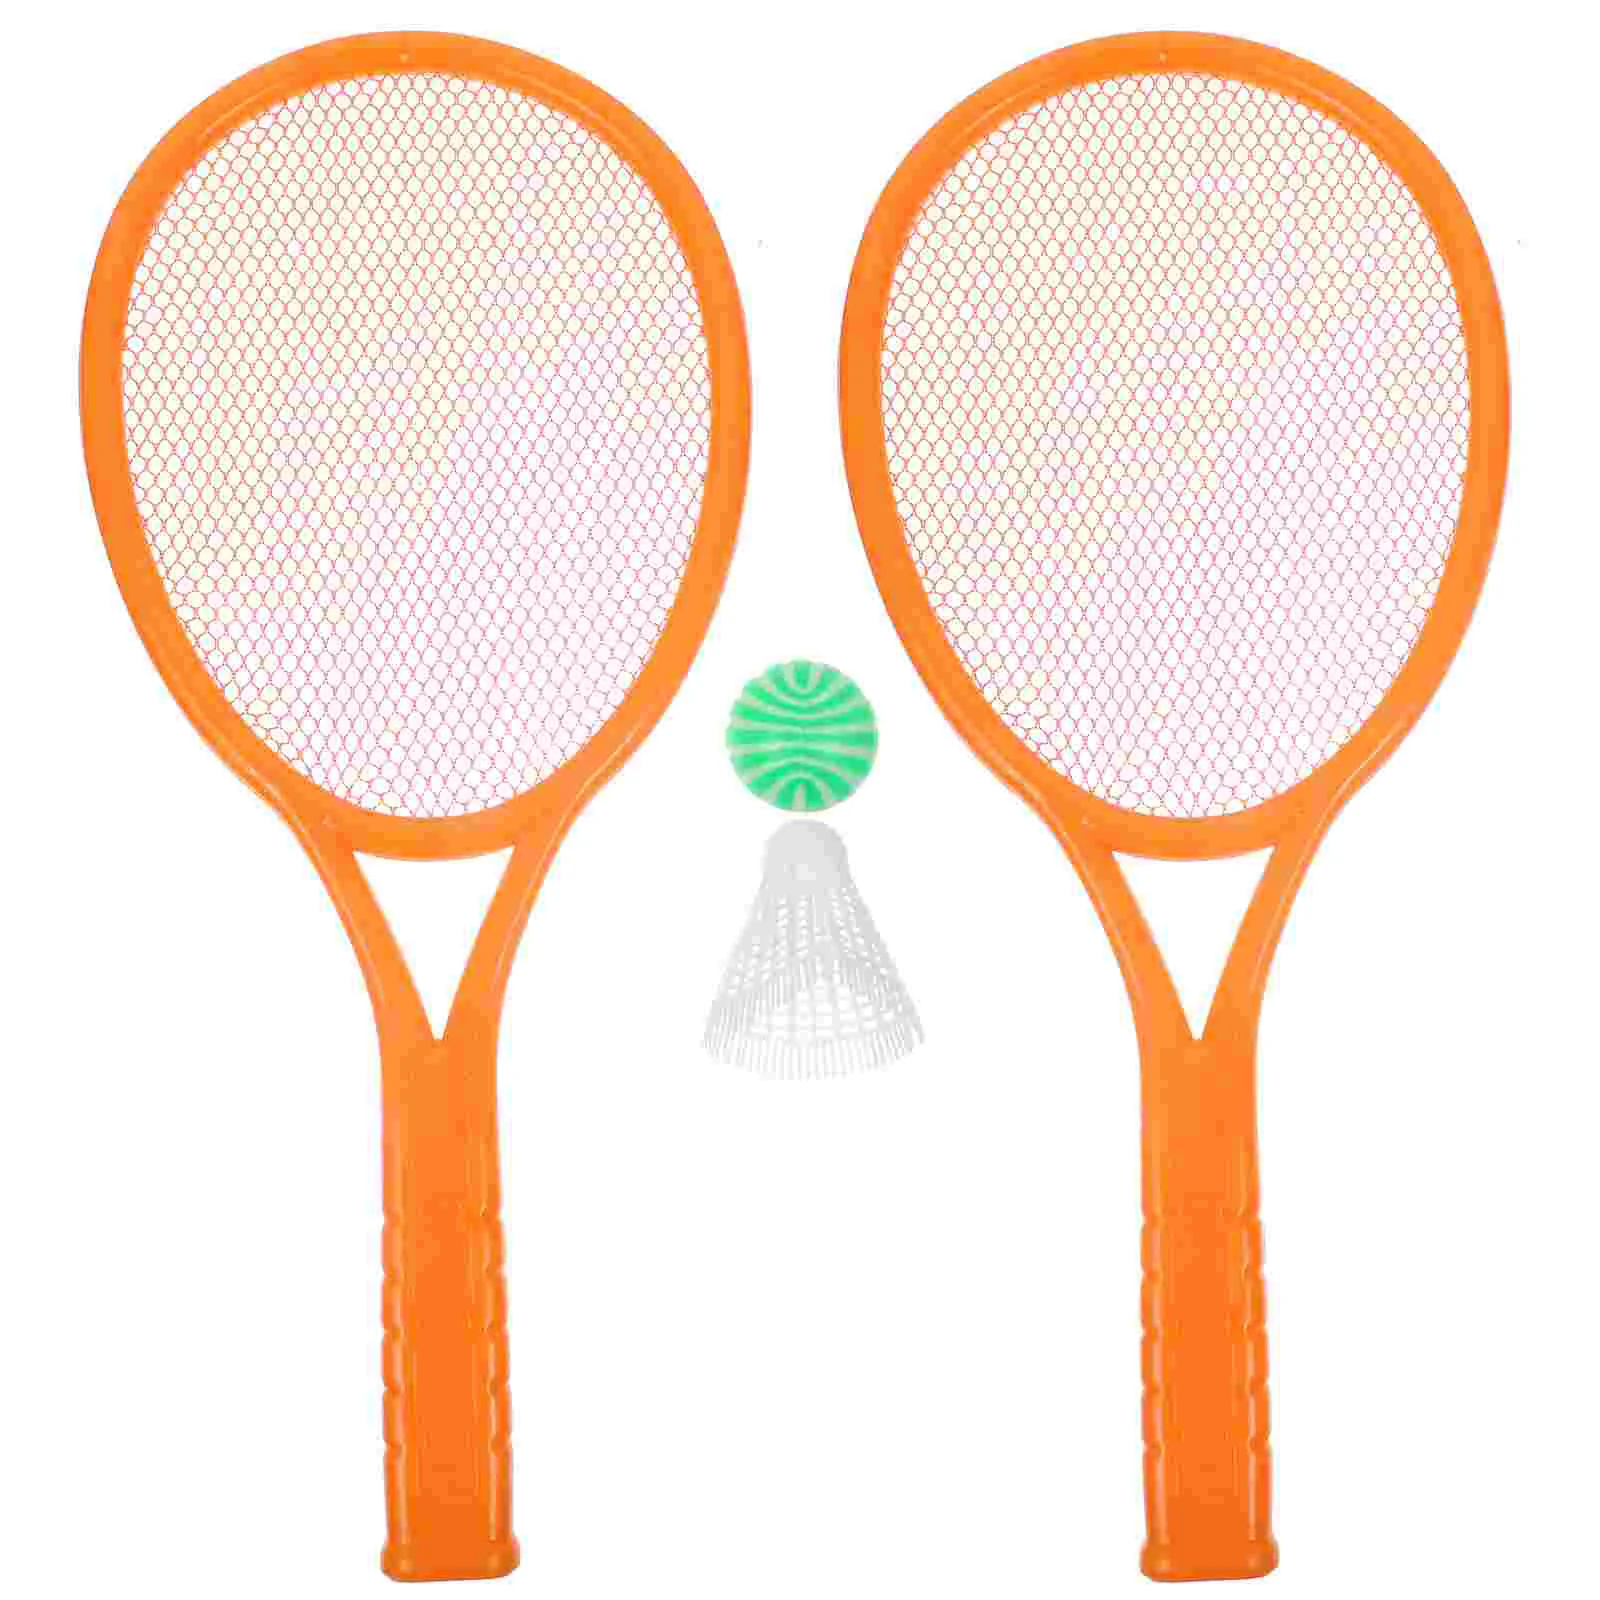 

1 Set Children Sports Badminton Set Tennis Racket and Balls Outdoor Sports Playing Set for Kids Children Toddlers ( 2pcs